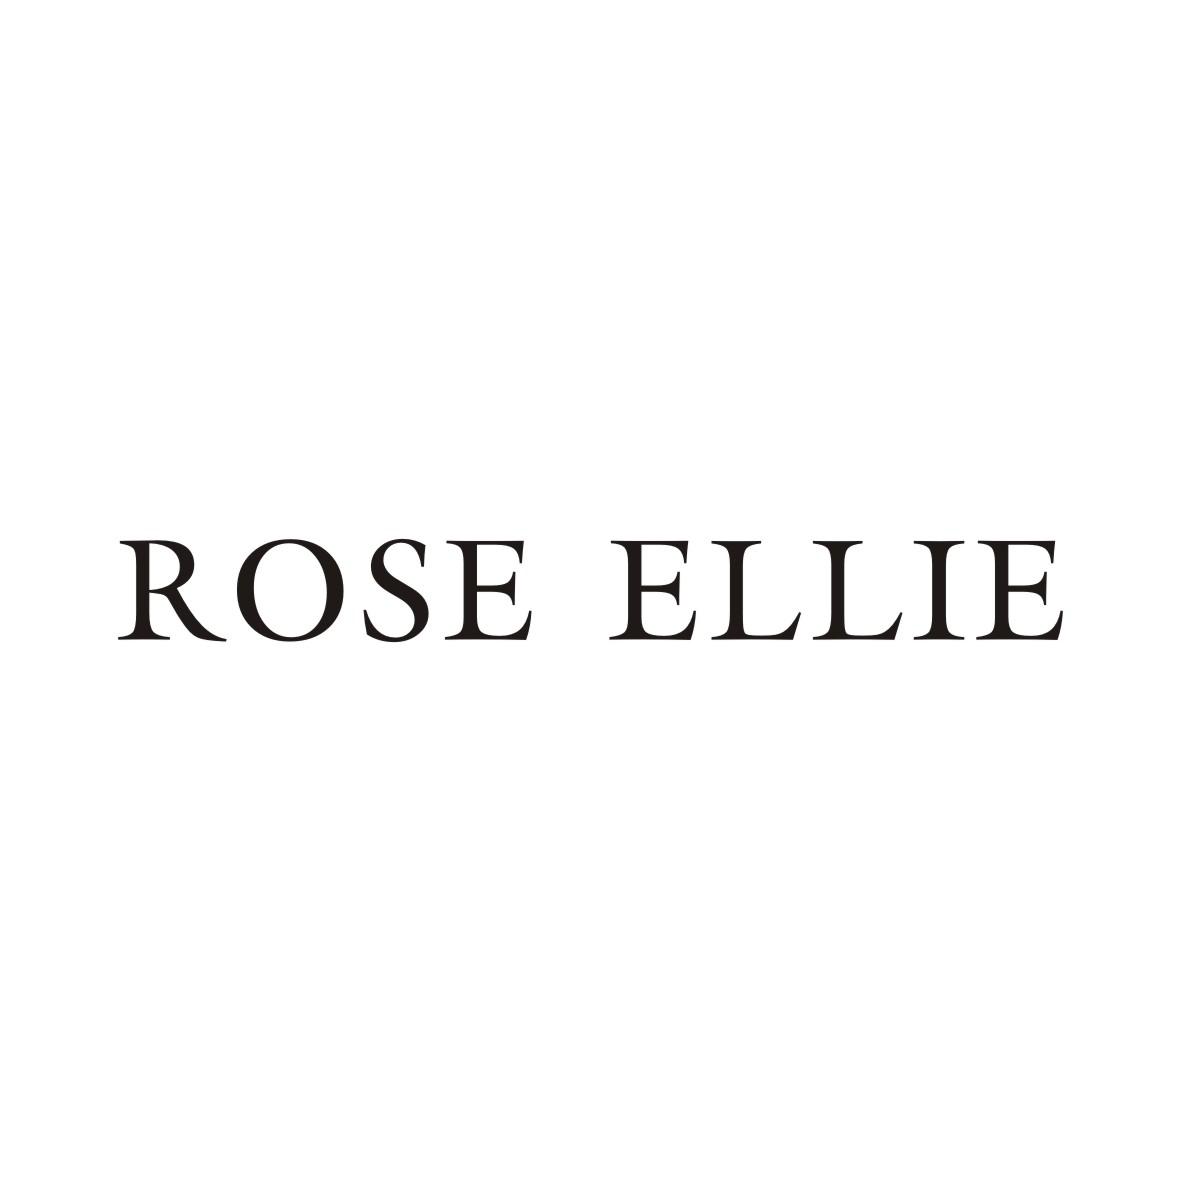 ROSE ELLIE商标转让